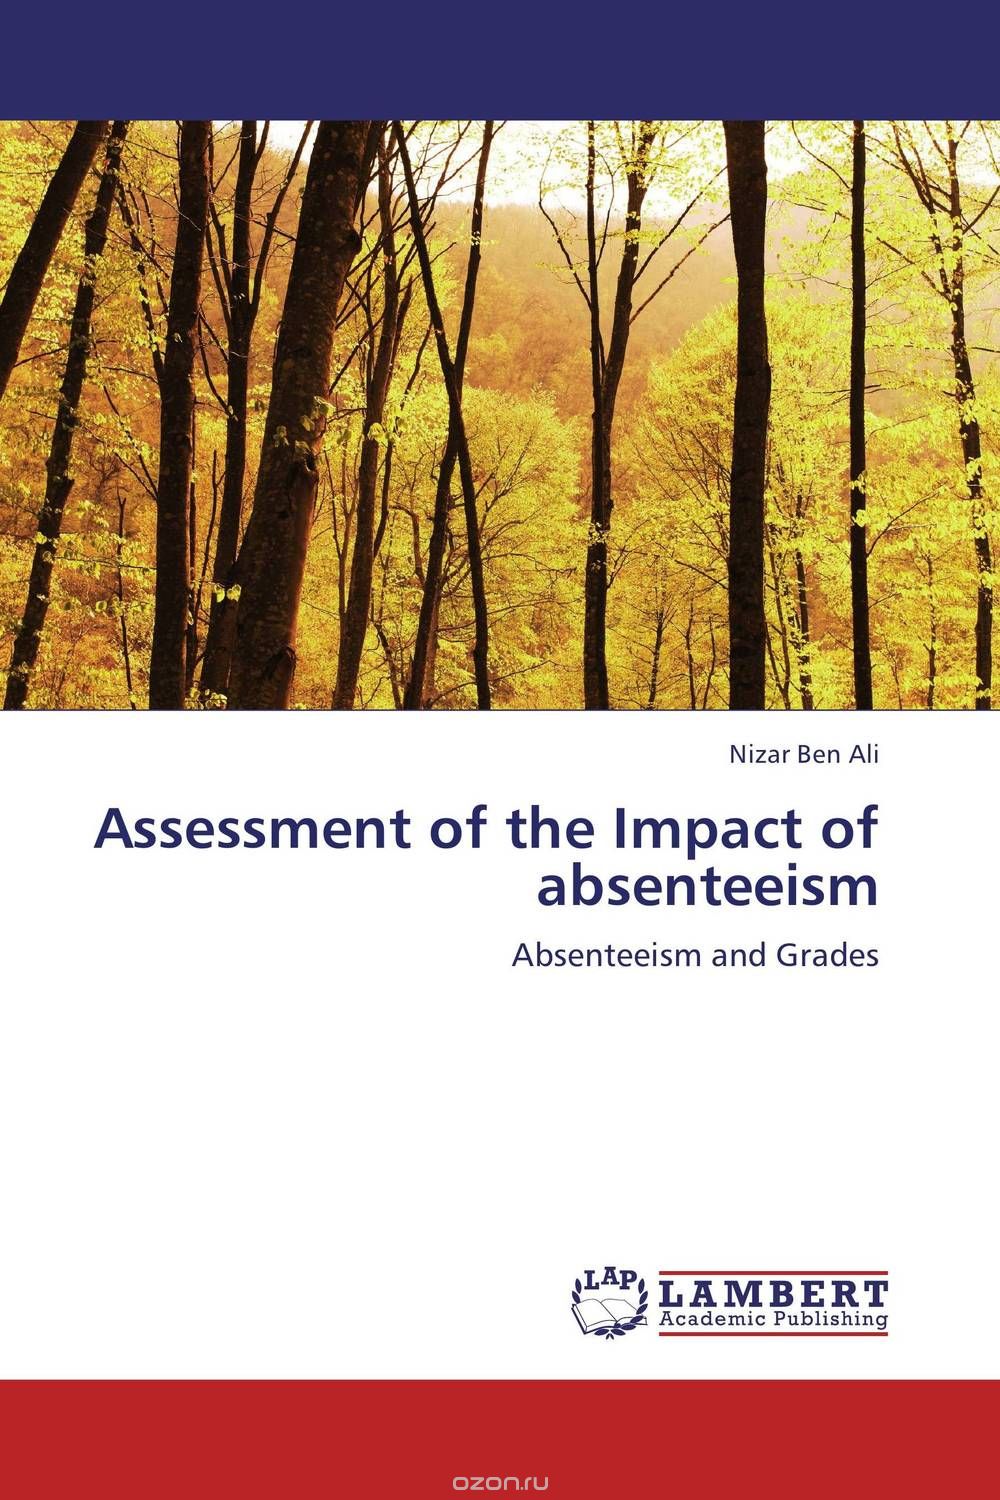 Скачать книгу "Assessment of the Impact of absenteeism"